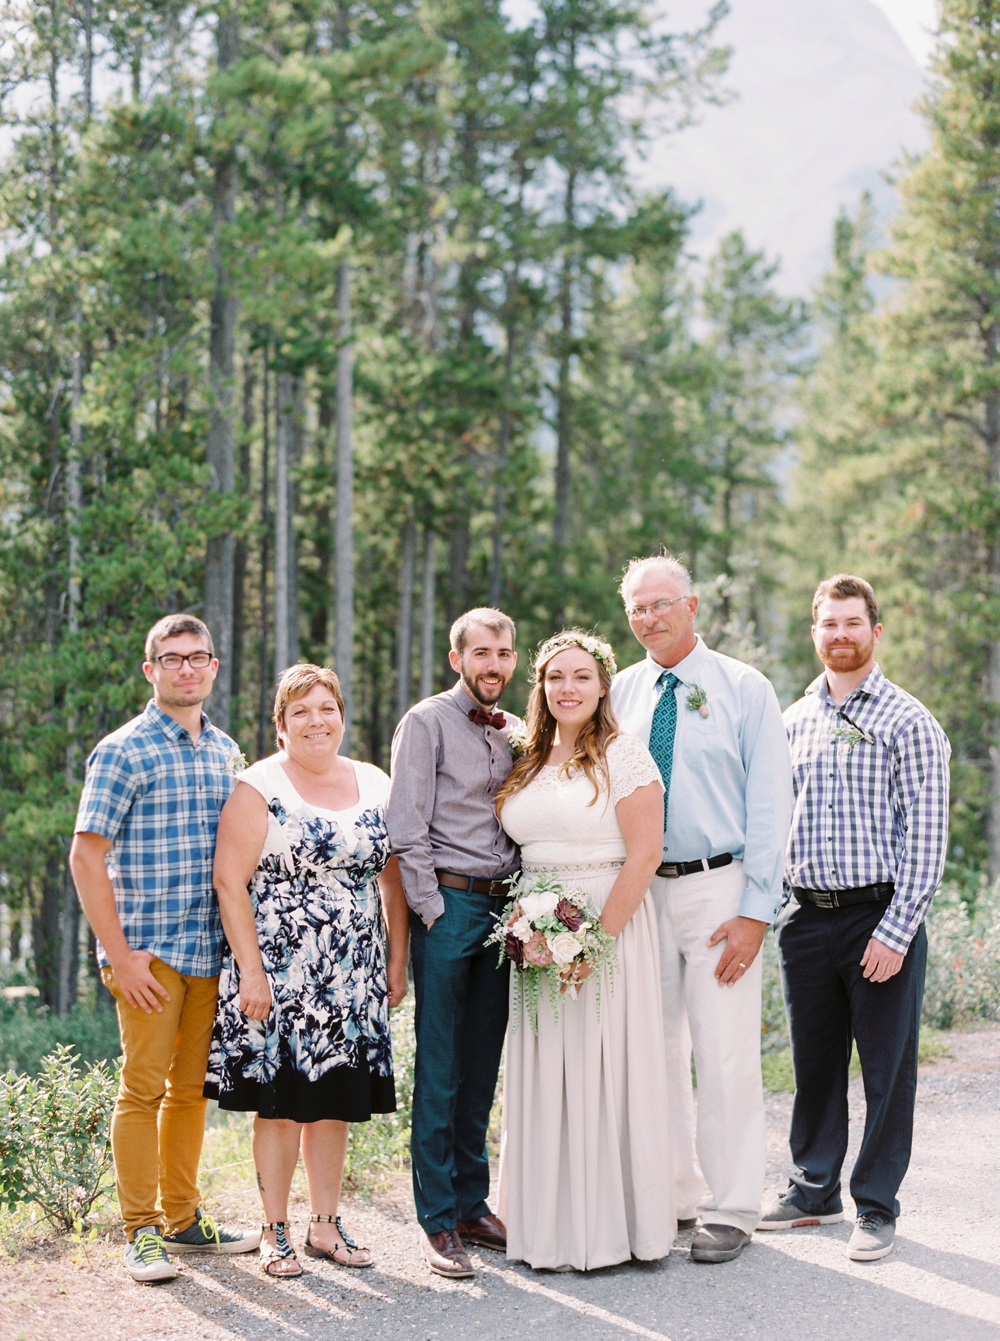 Calgary Canmore and Banff Rocky Mountain Wedding Photographer | Kananaskis Mountain Intimate wedding elopement | Justine Milton Photography